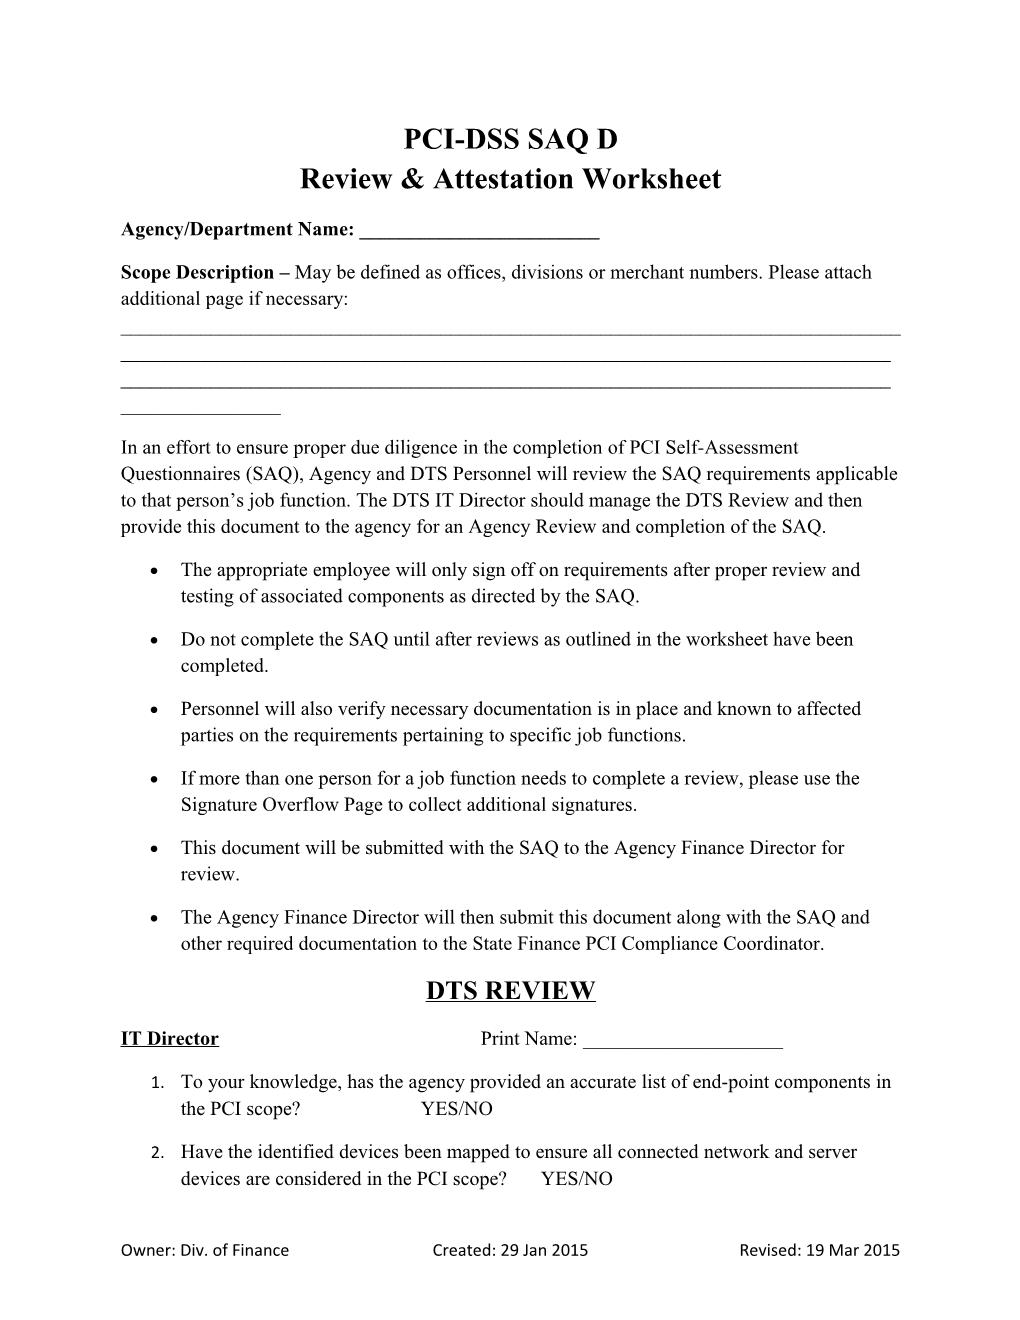 PCI-DSS SAQ D Review & Attestation Worksheet